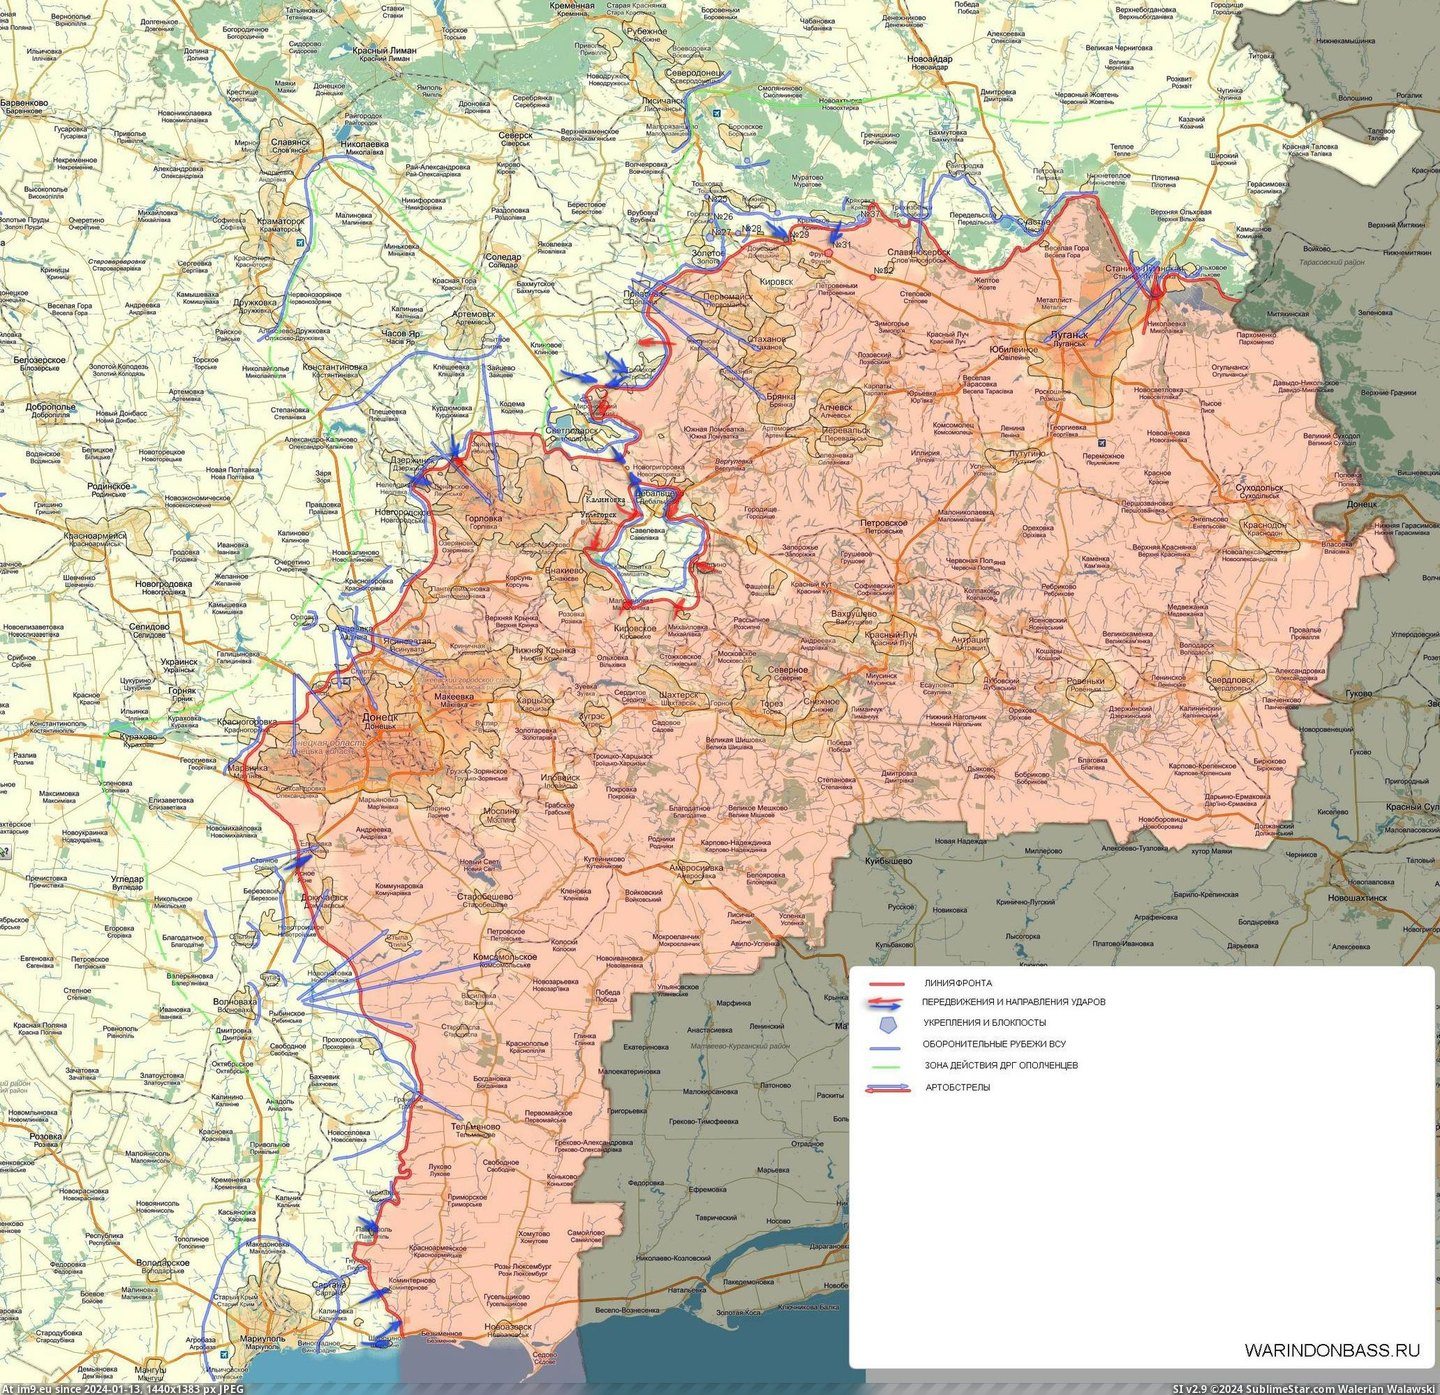 #War #Current #Civil #Ukrainian #Situation [Mapporn] Current situation in the Ukrainian civil war. [2063x1994] Pic. (Image of album My r/MAPS favs))